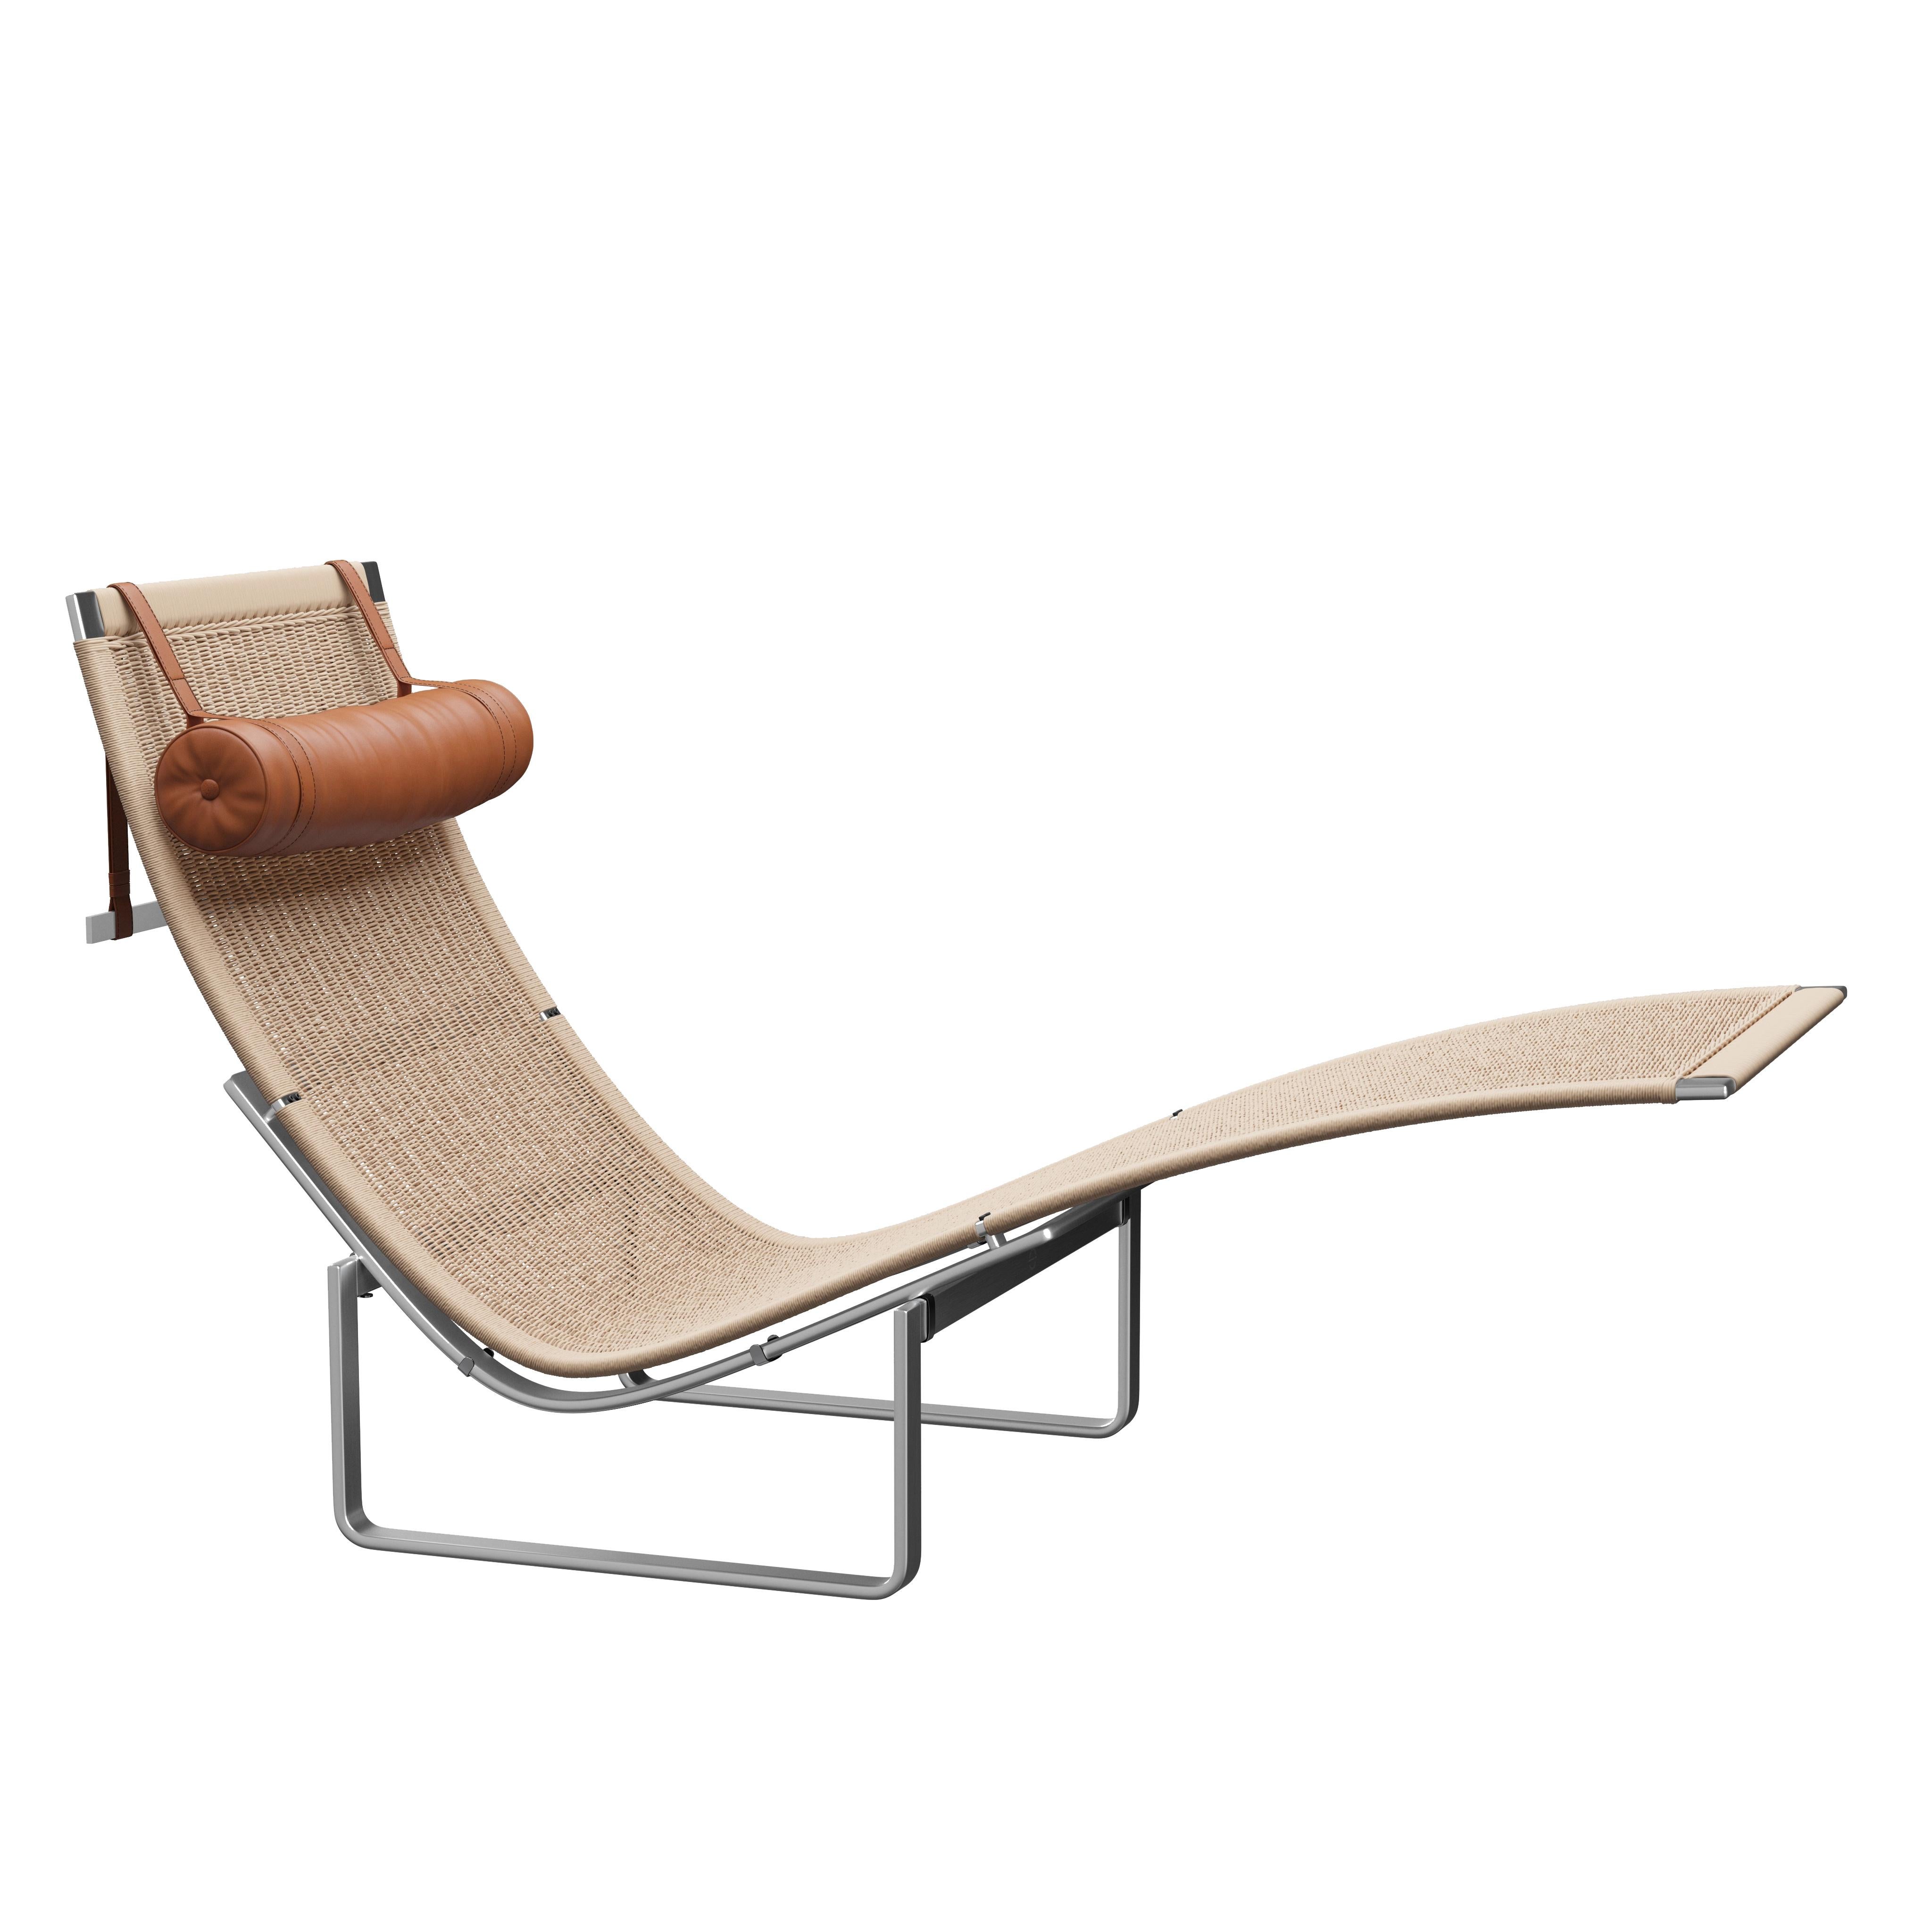 Steel Poul Kjærholm 'PK24' Wicker Lounge Chair for Fritz Hansen with Leather Headrest For Sale